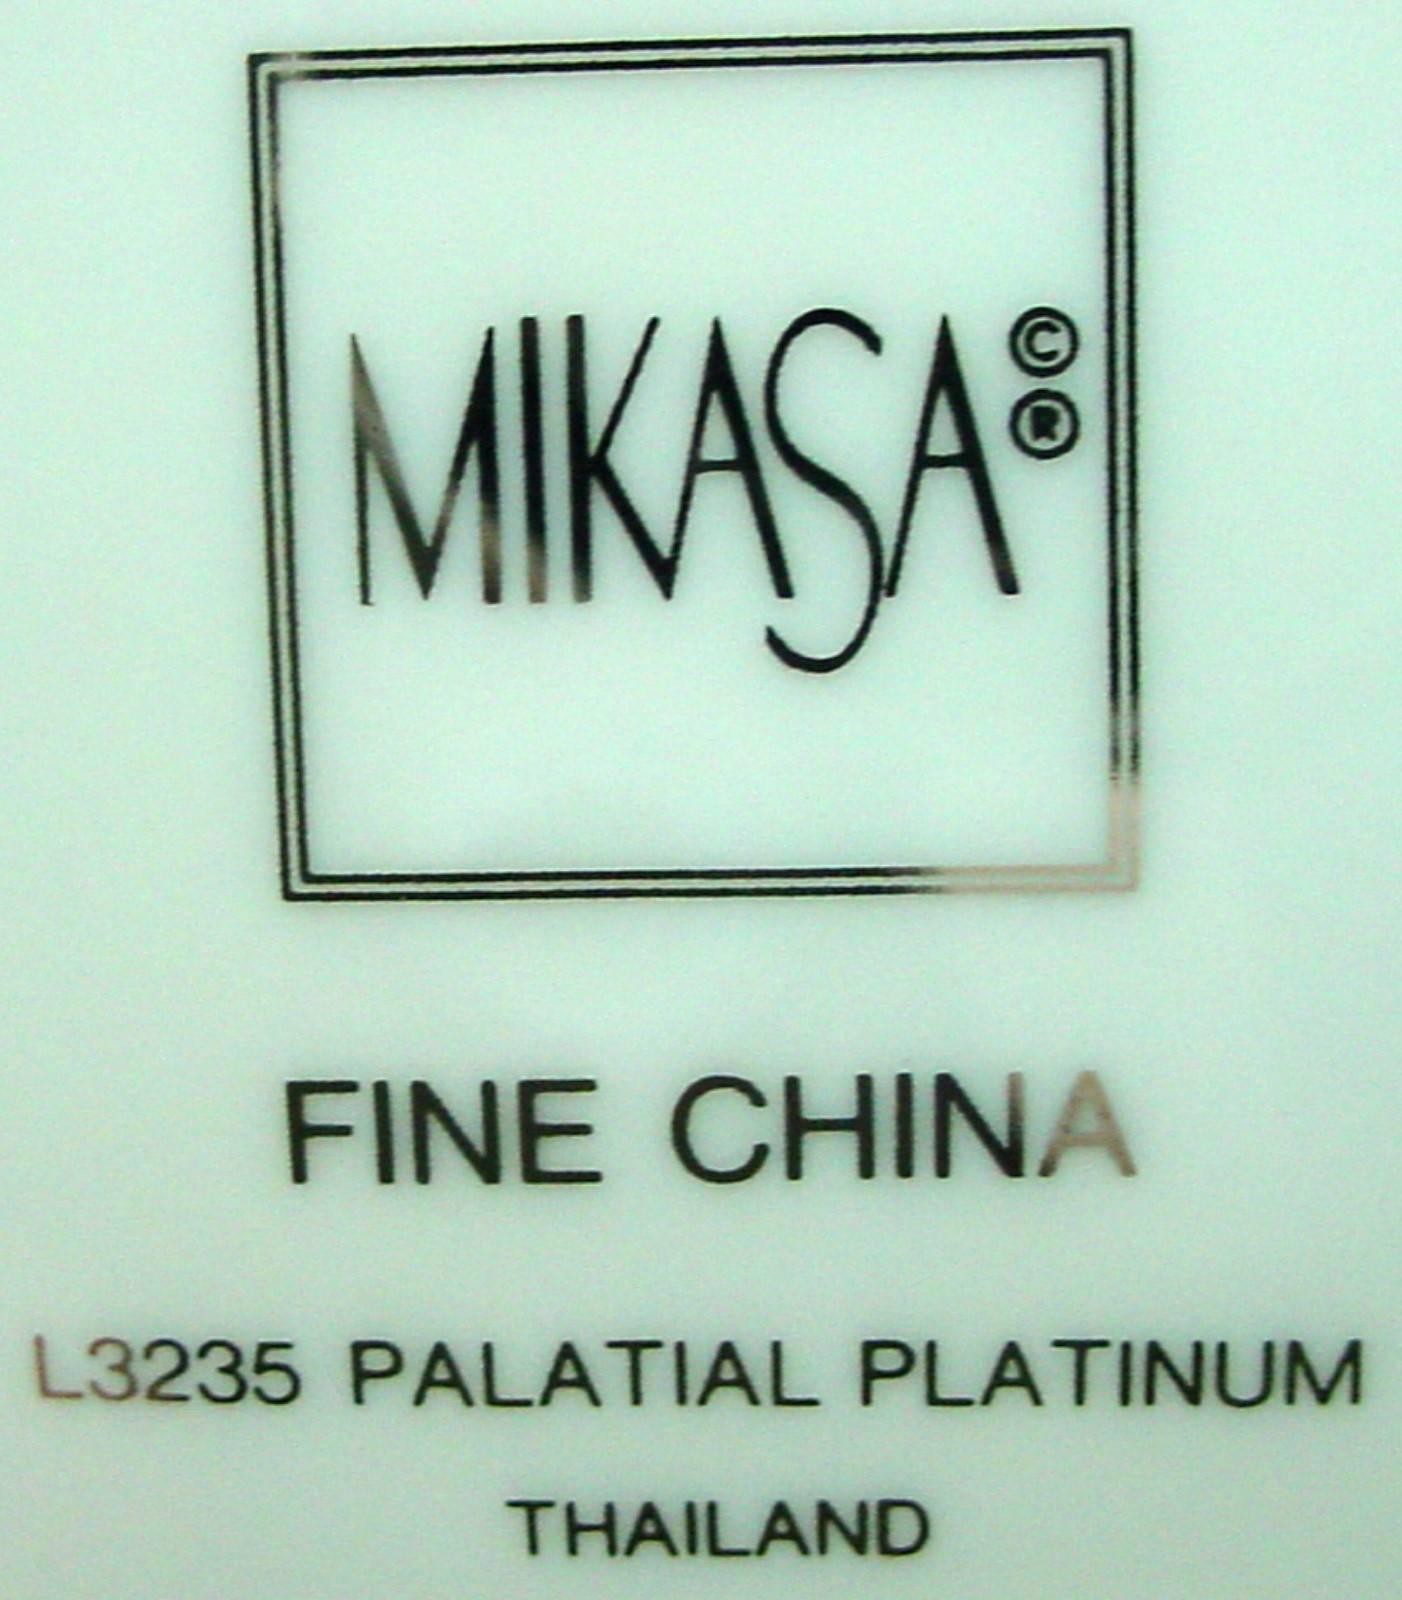 MIKASA china PALATIAL PLATINUM 65-piecc\e SET SERVICE for Twelve + Serving 1